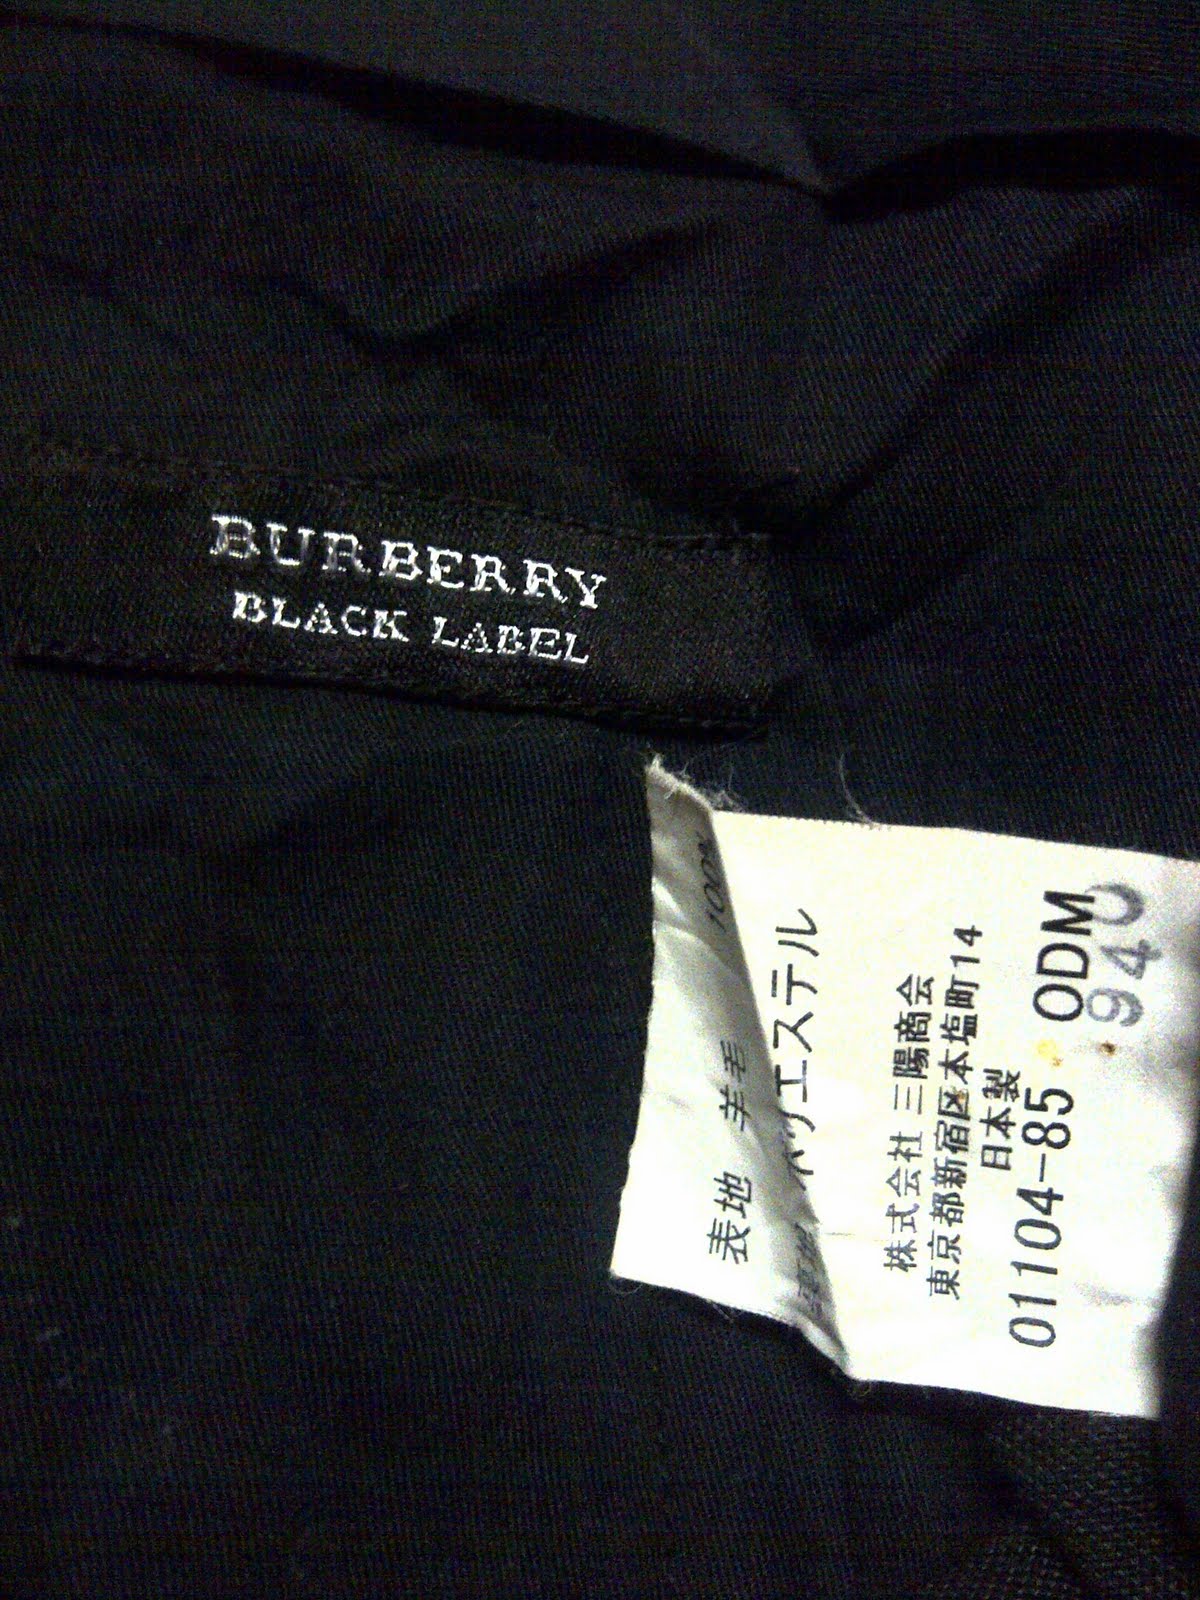 burberry black label pants